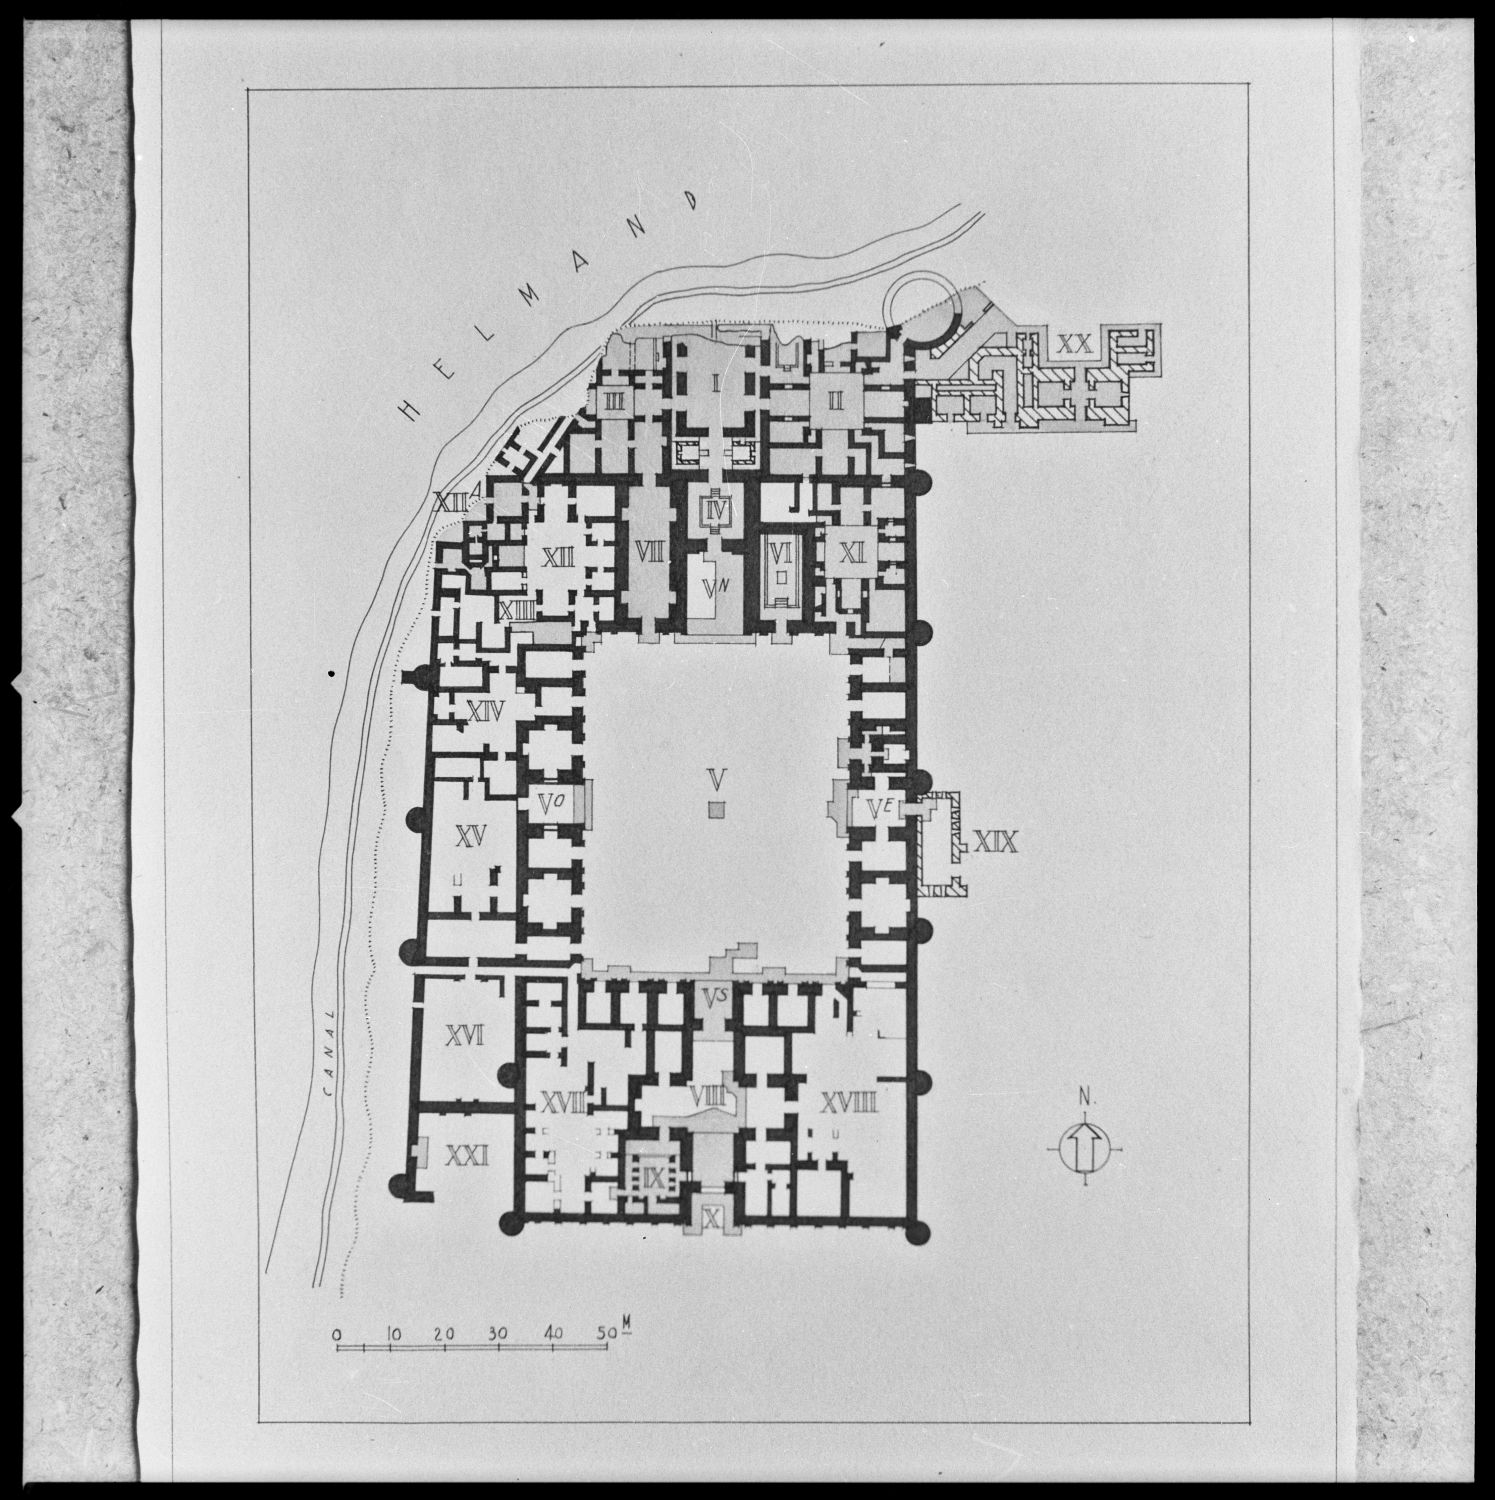 Plan of palace, from Daniel Schlumberger, <span style="font-style: italic;">Lashkari Bazar: Une residence royale ghaznévide et ghoride. Part 1A: L’architecture.</span> Paris: Diffusion de Boccard, 1978.